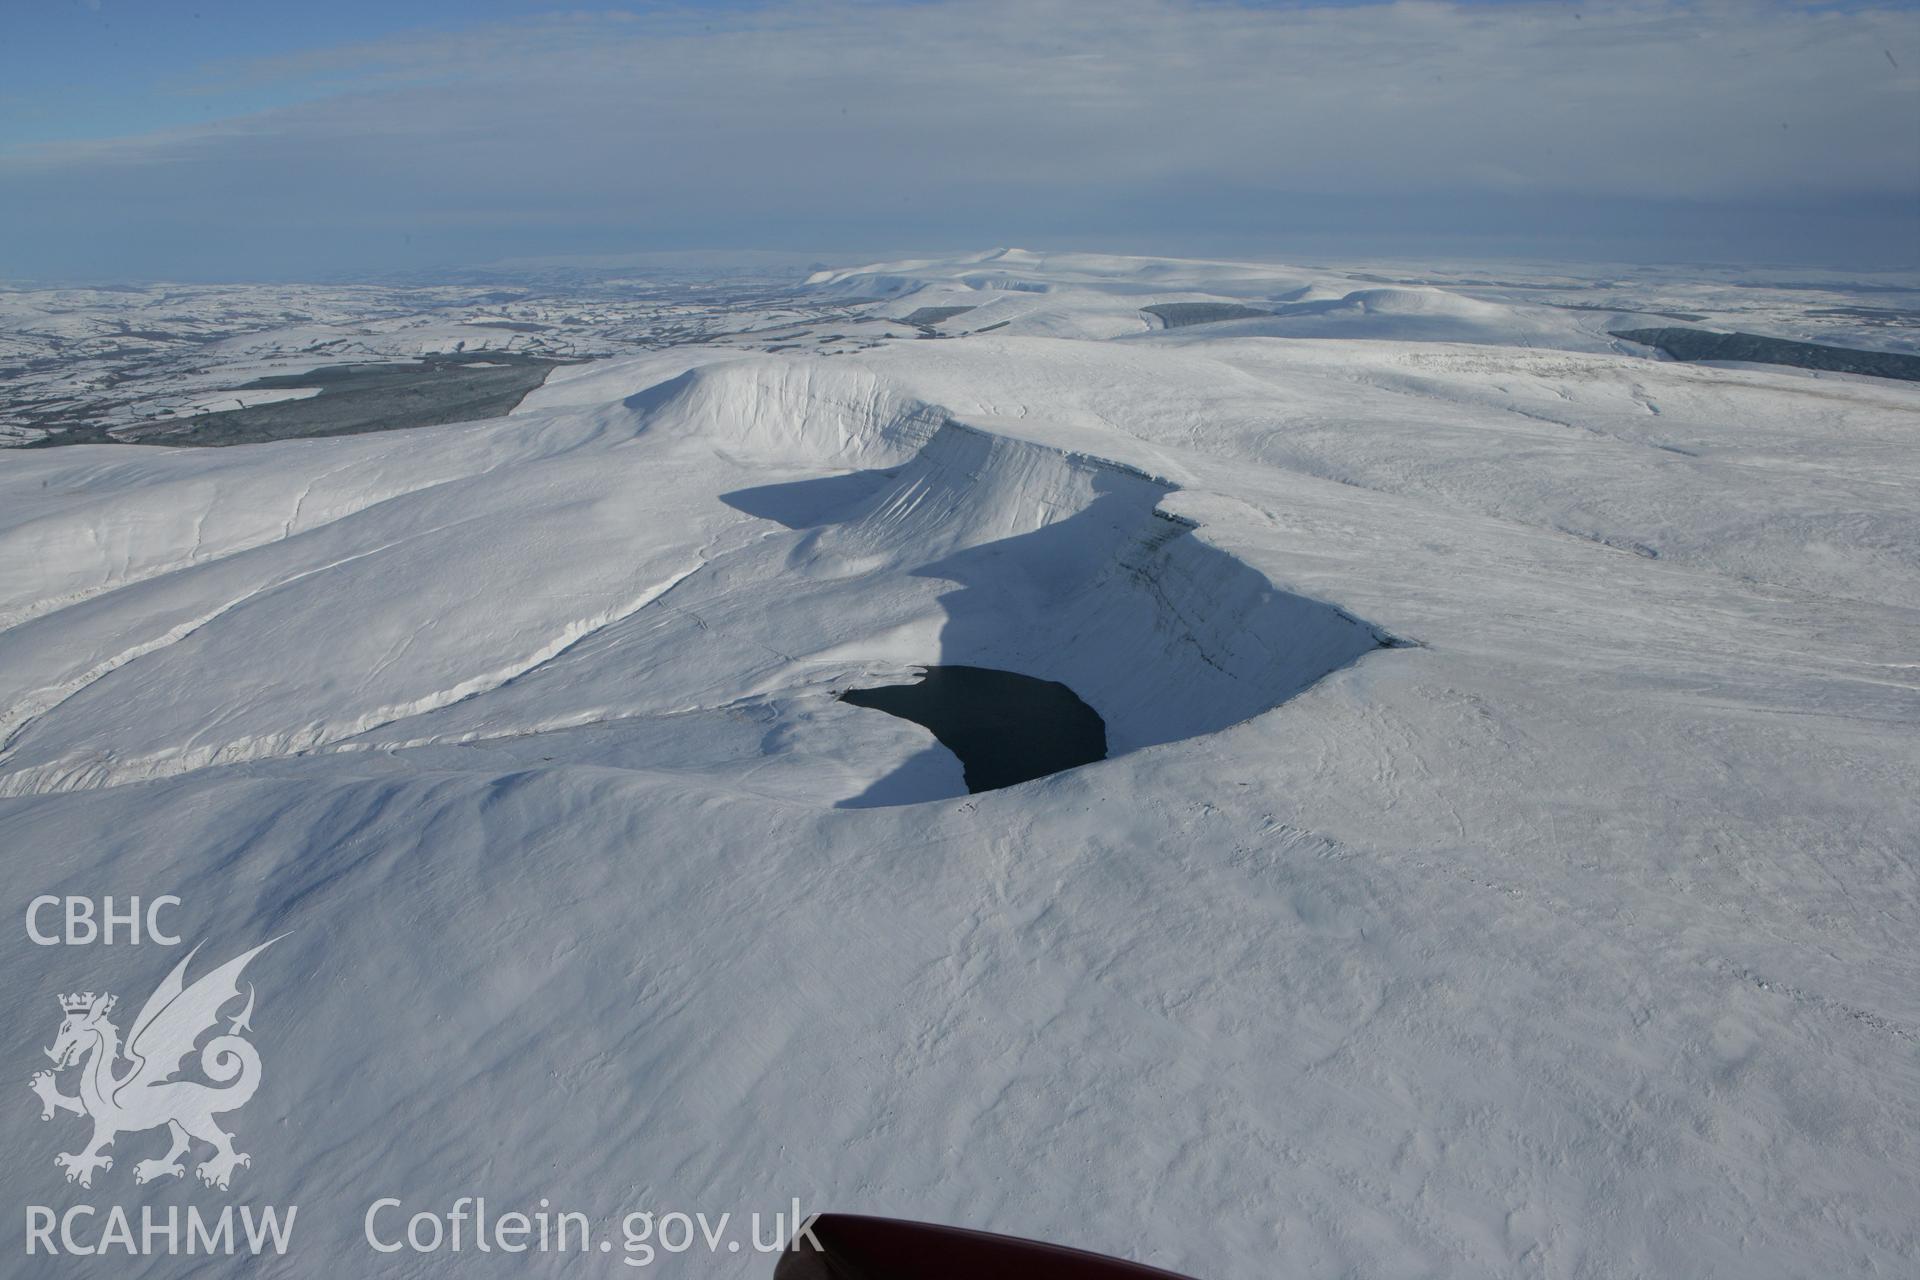 RCAHMW colour oblique photograph of Llyn y Fan Fach, winter landscape. Taken by Toby Driver on 06/02/2009.